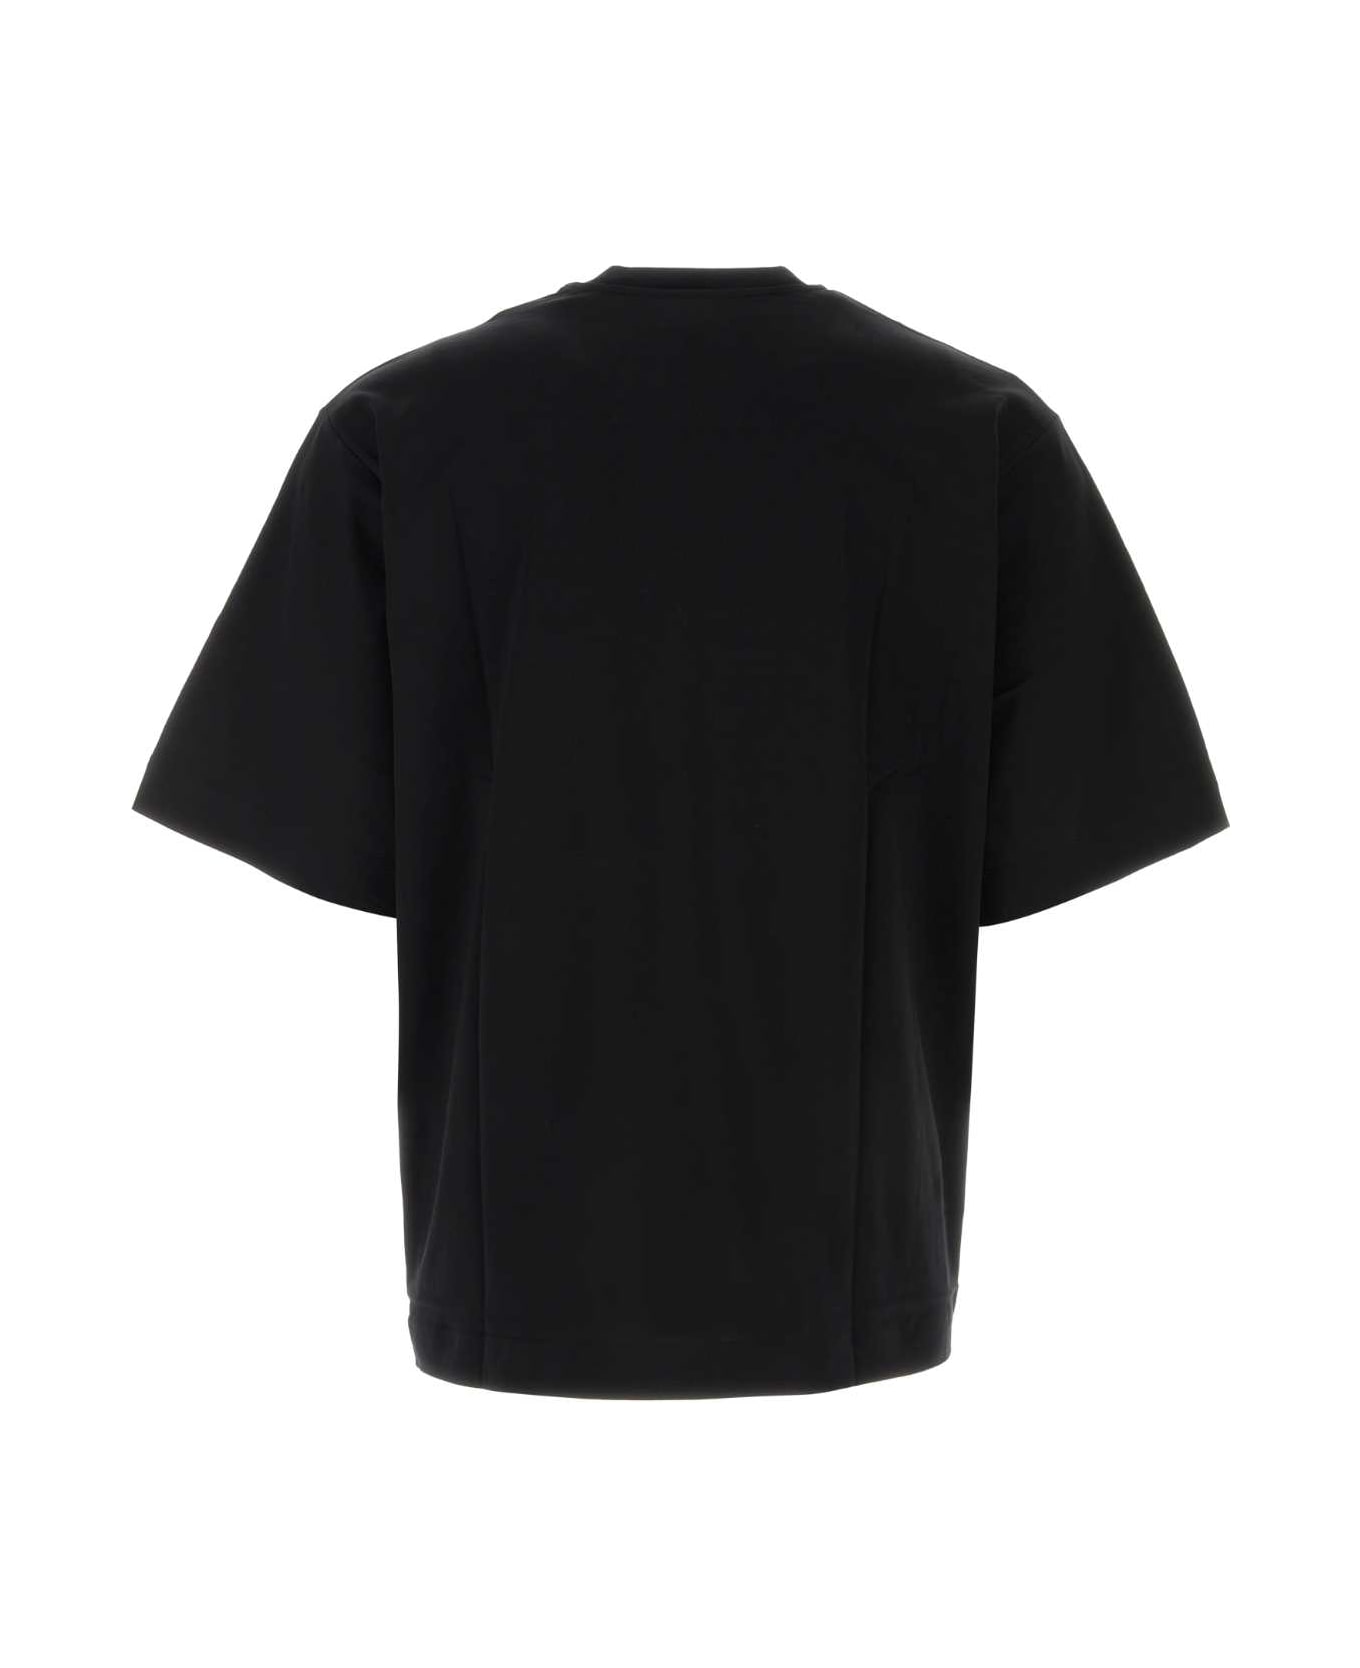 Givenchy Black Cotton T-shirt - BLACK